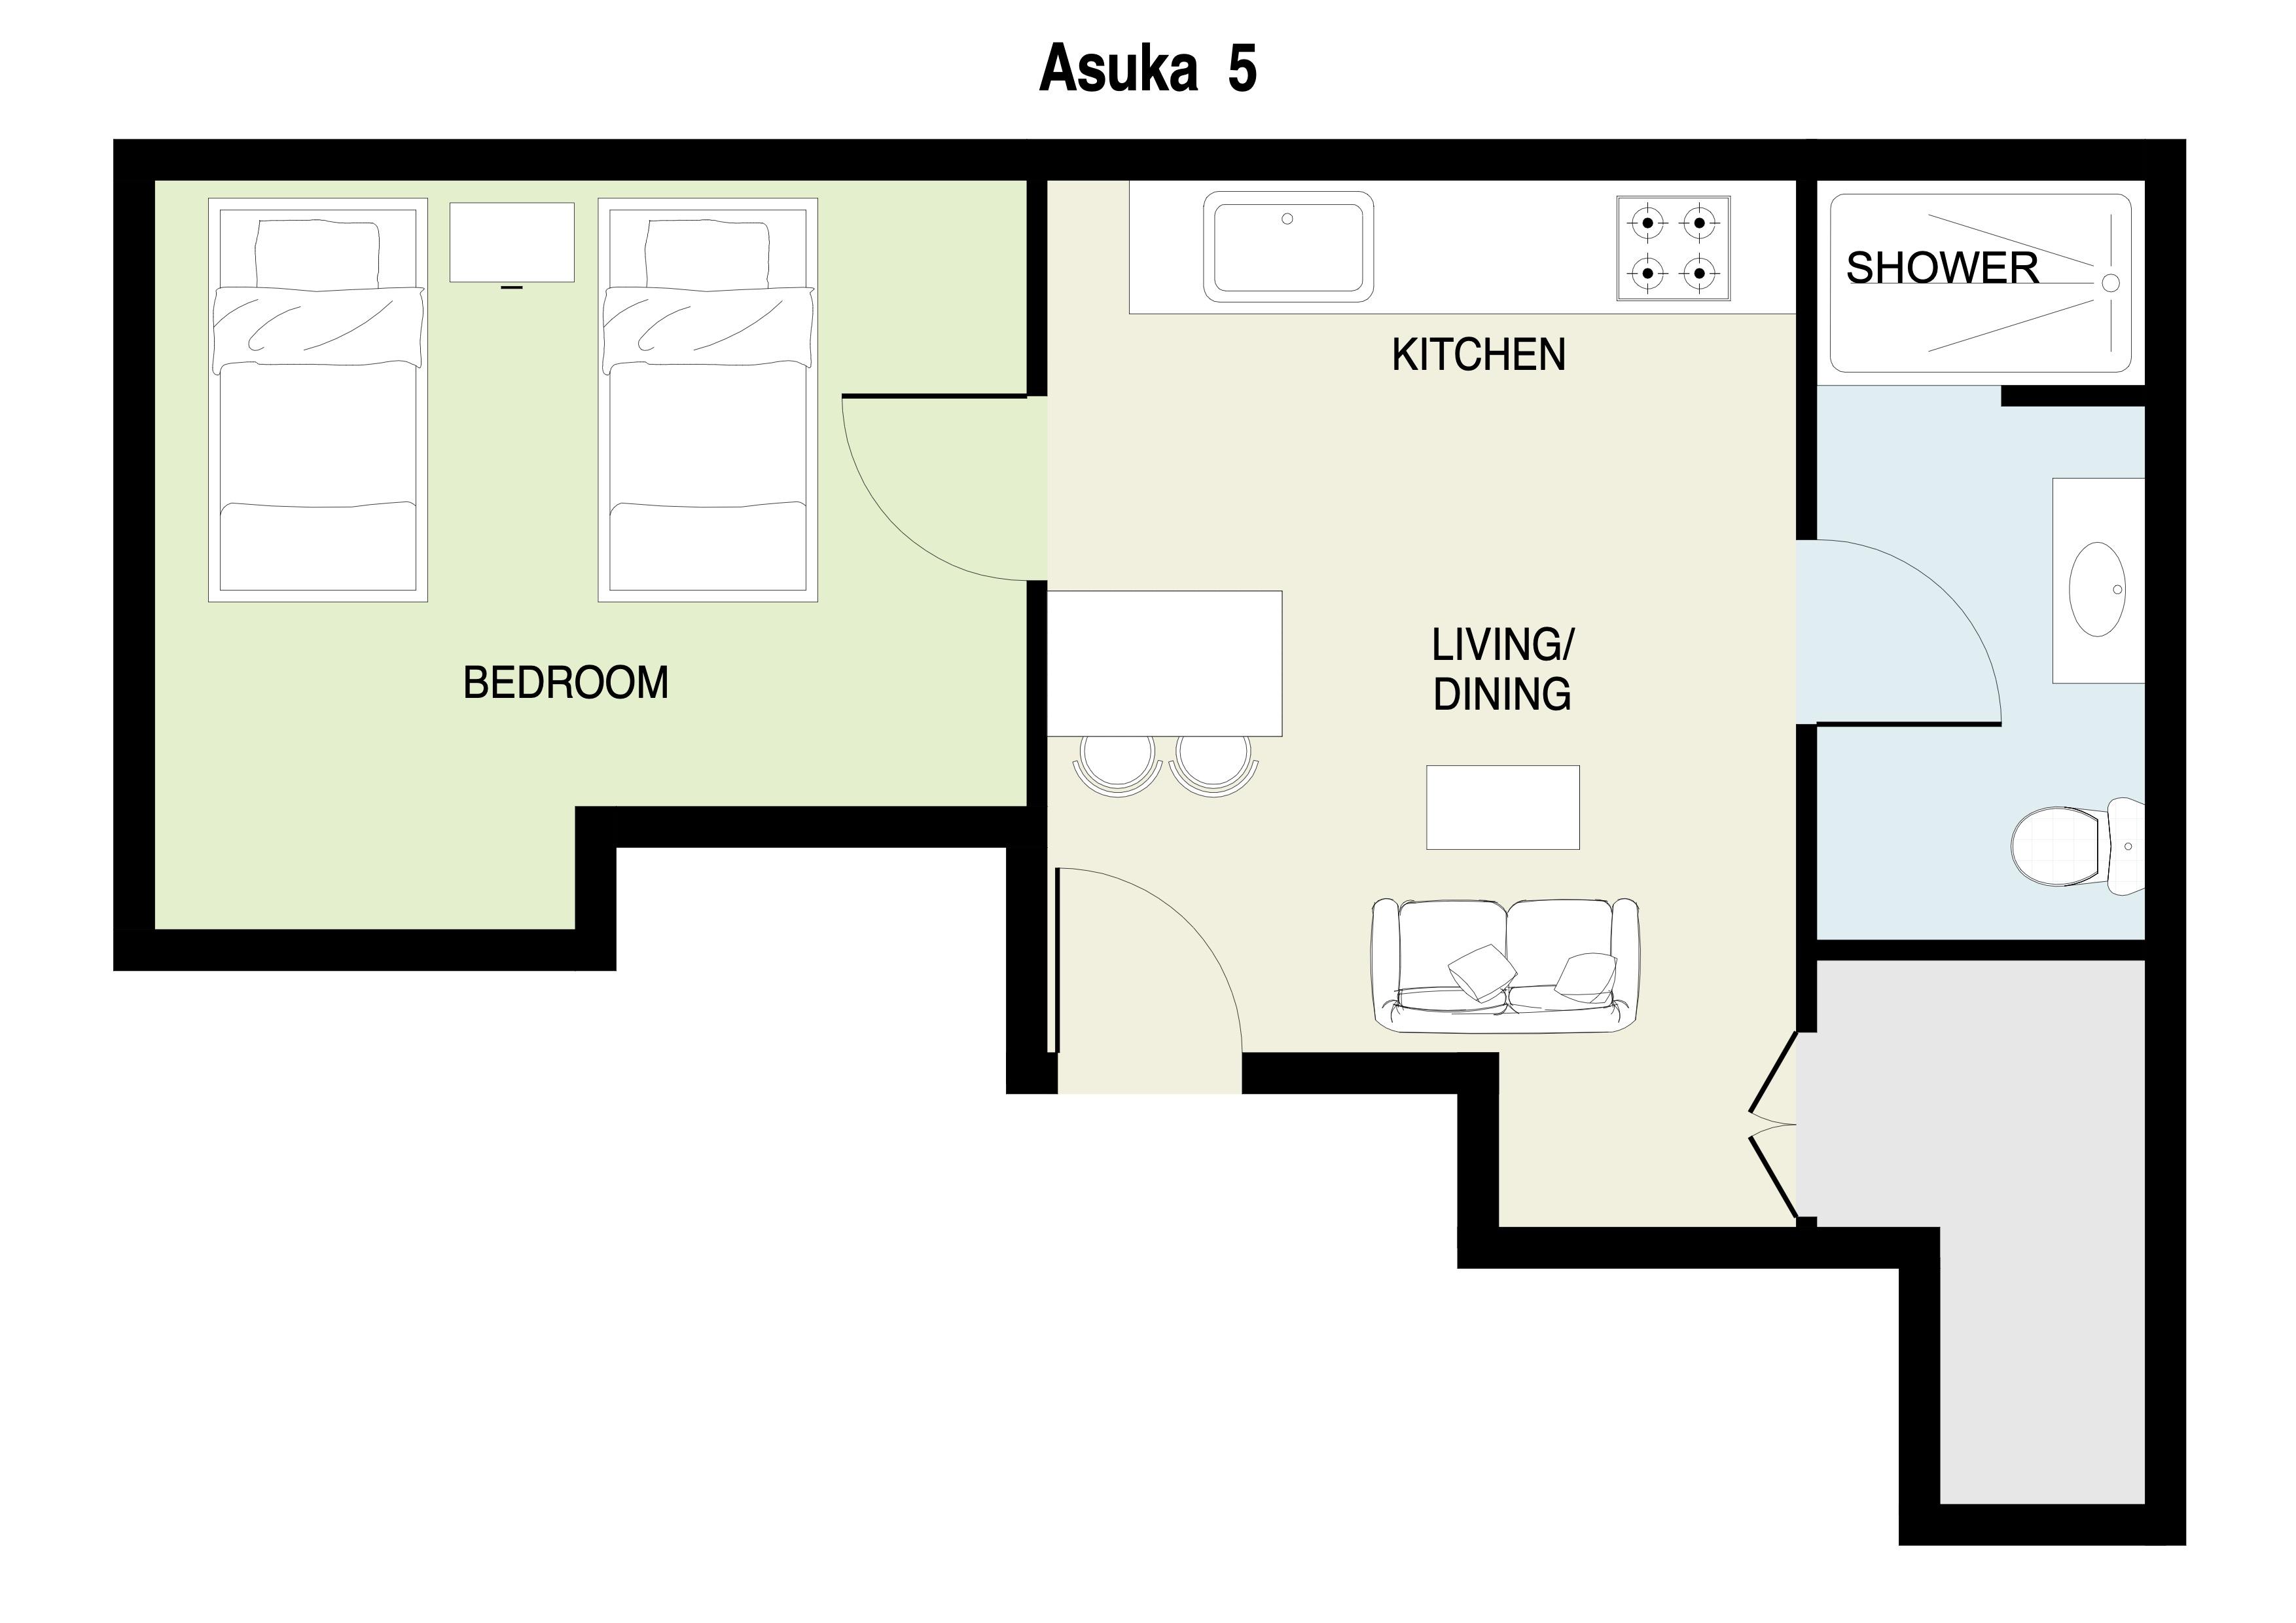 Asuka 5 Floor Plans